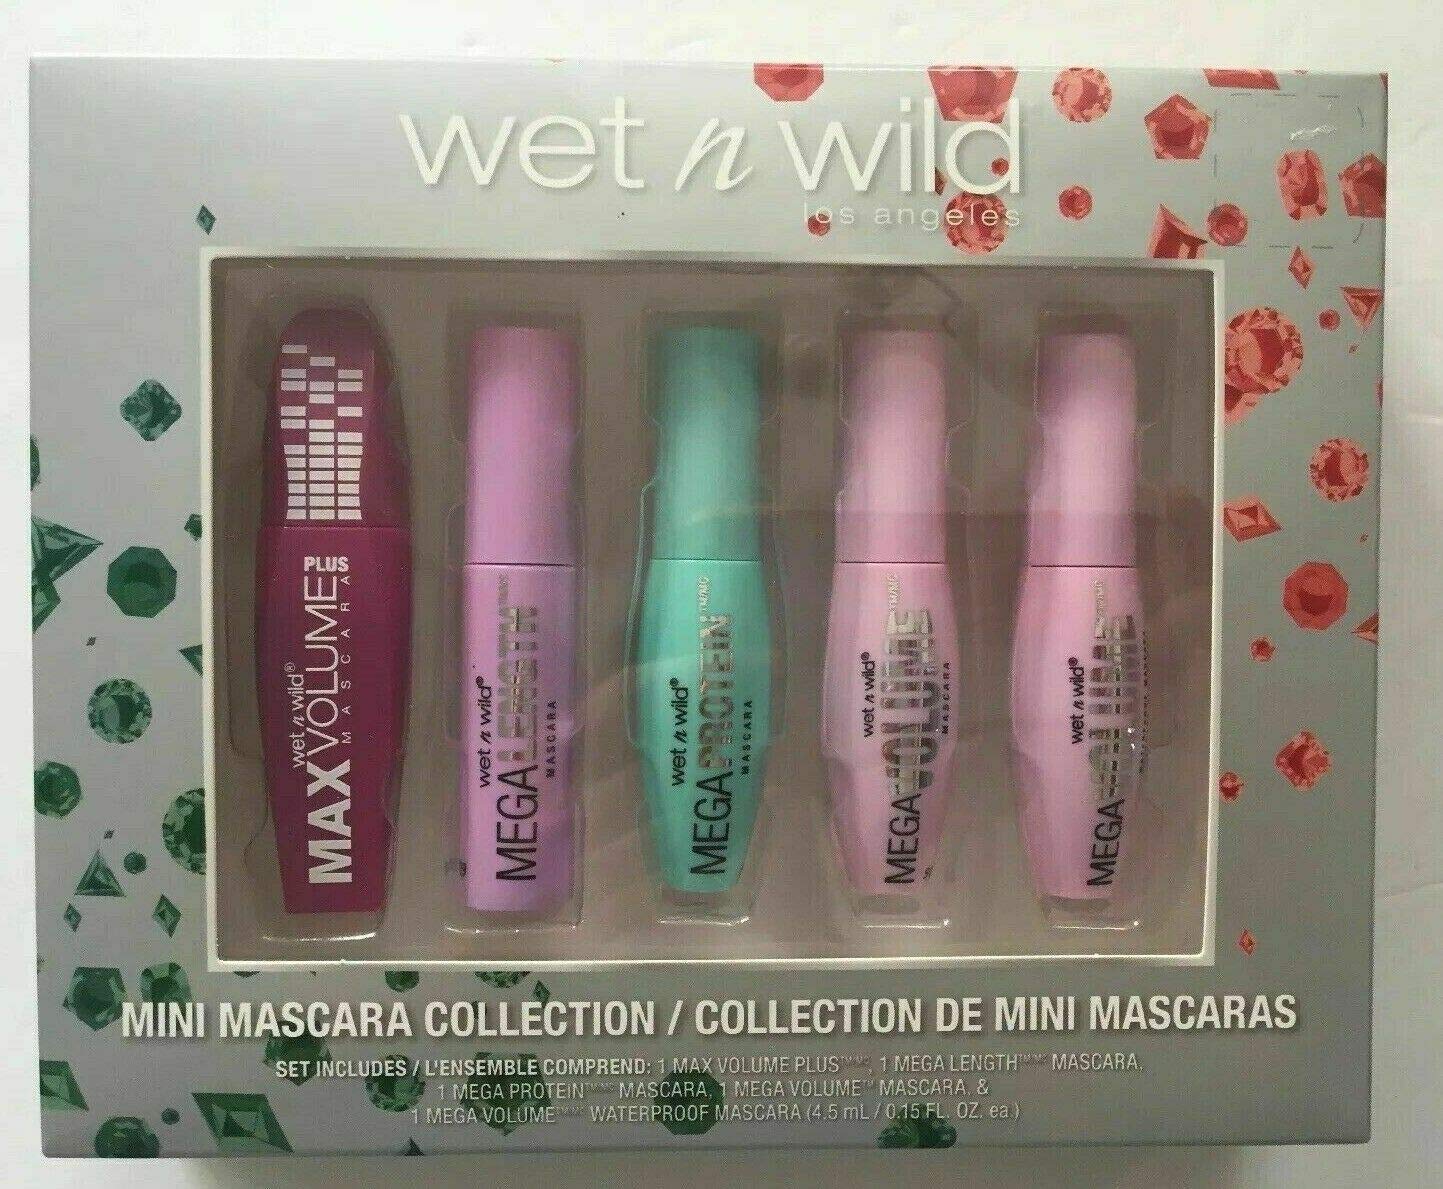 WET N WILD Mini Mascara Collection مجموعة مسكارا الرموش الميني